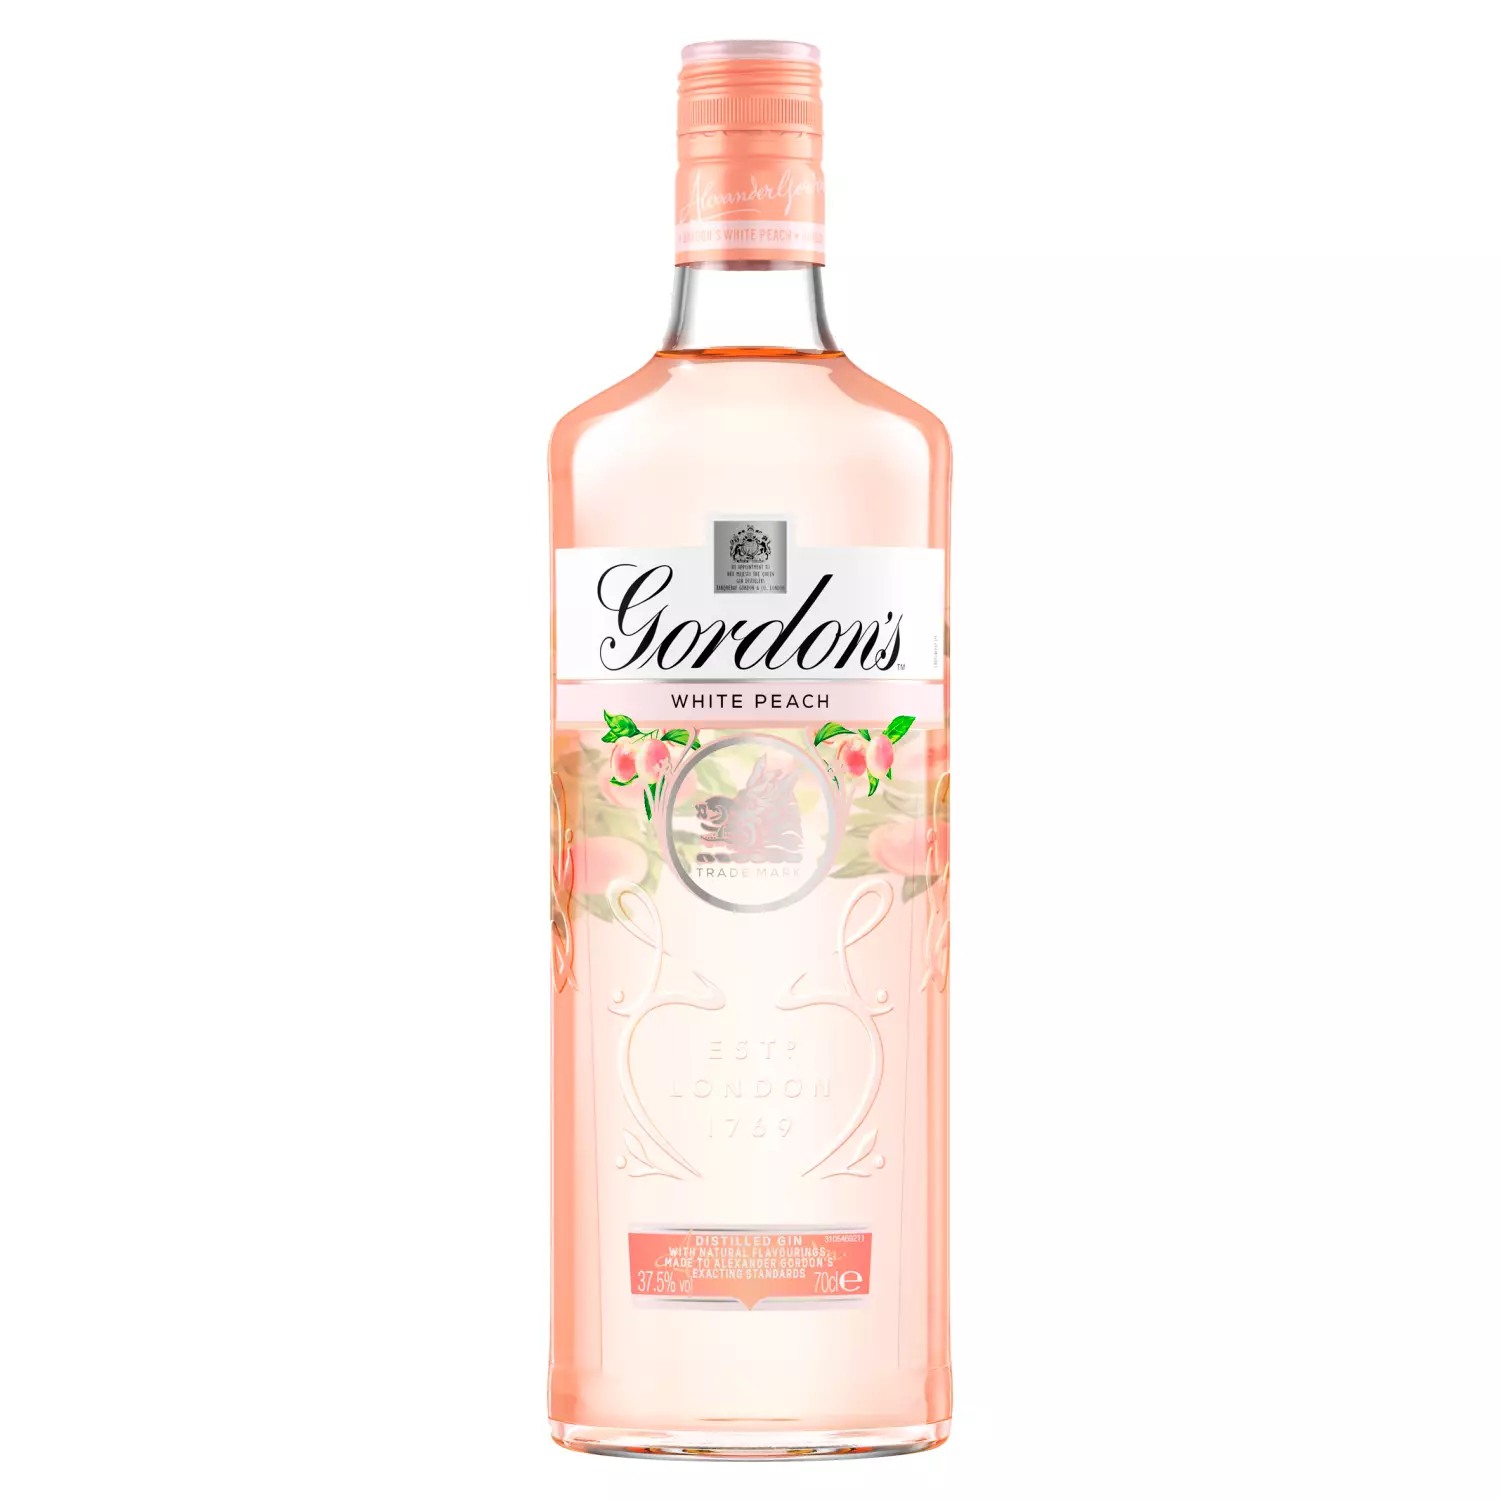 The White Peach gin is £13 a bottle in Asda (